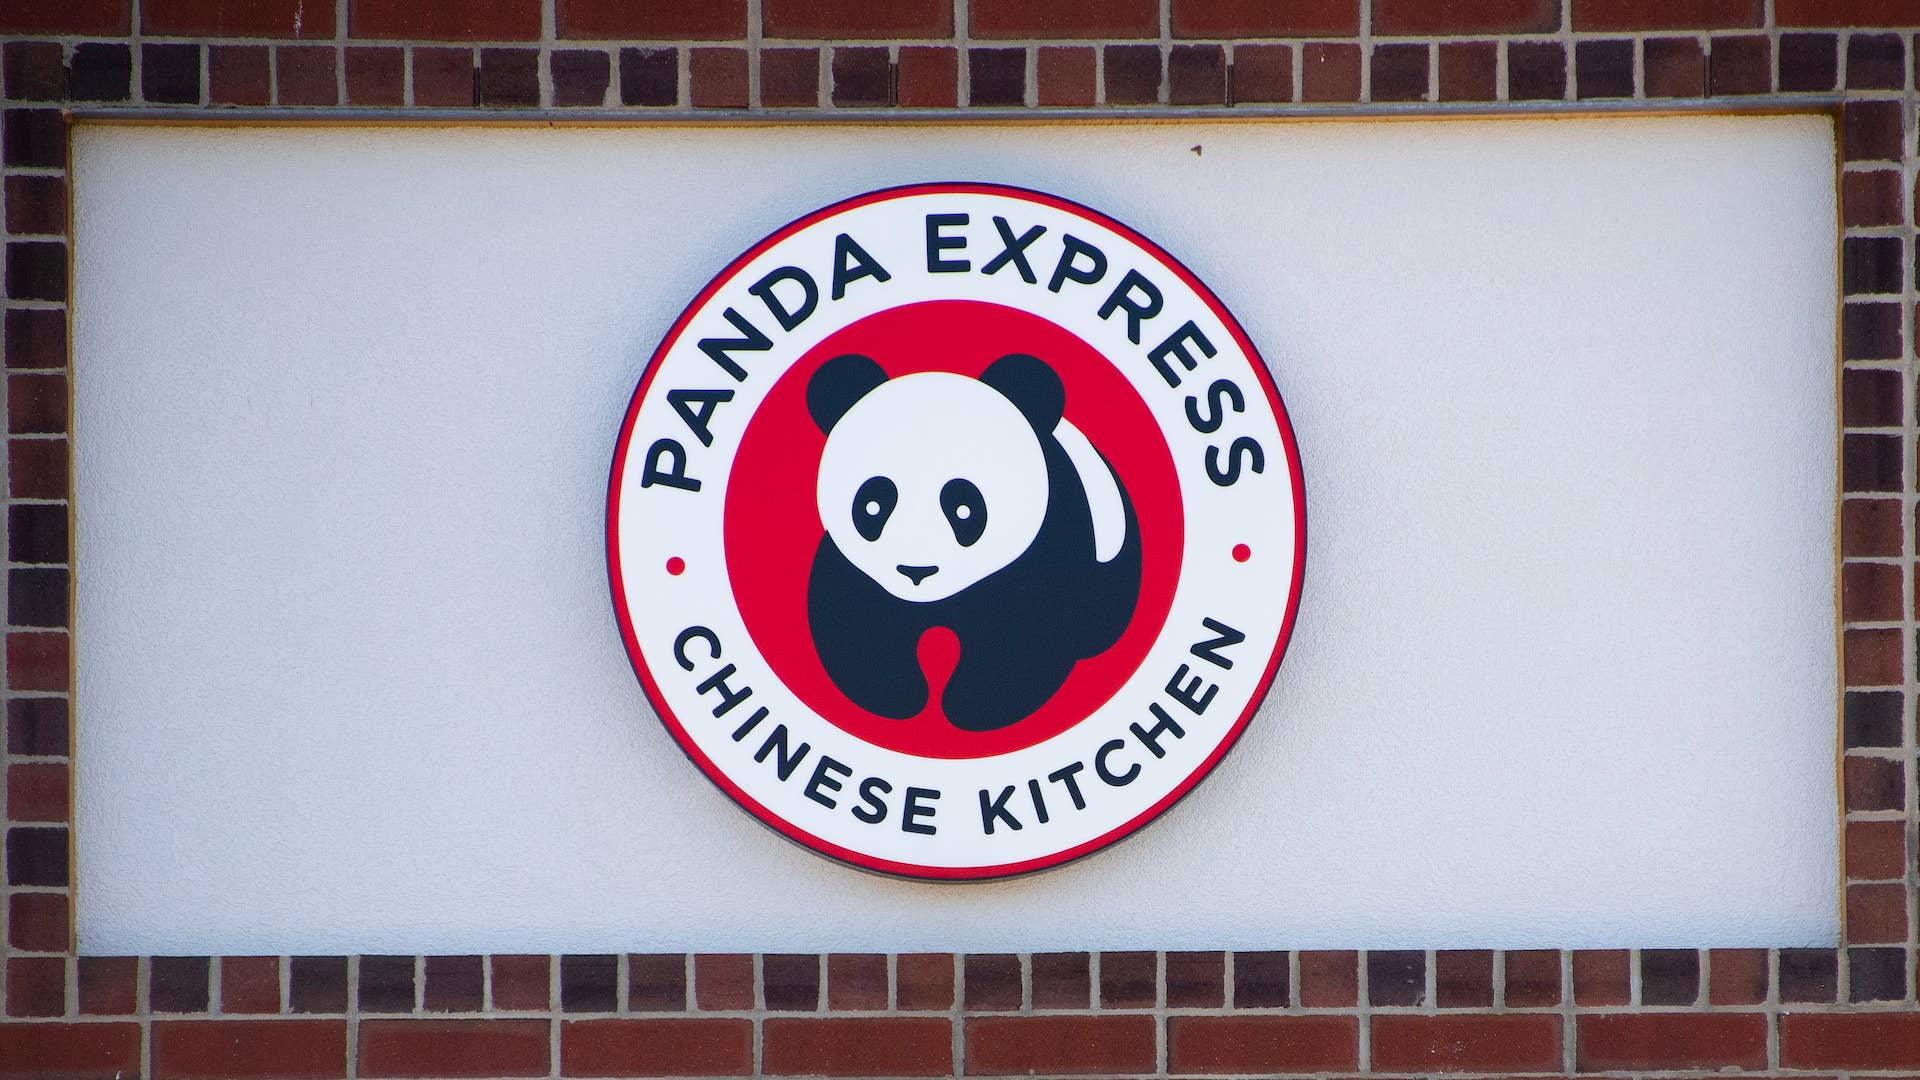 panda express